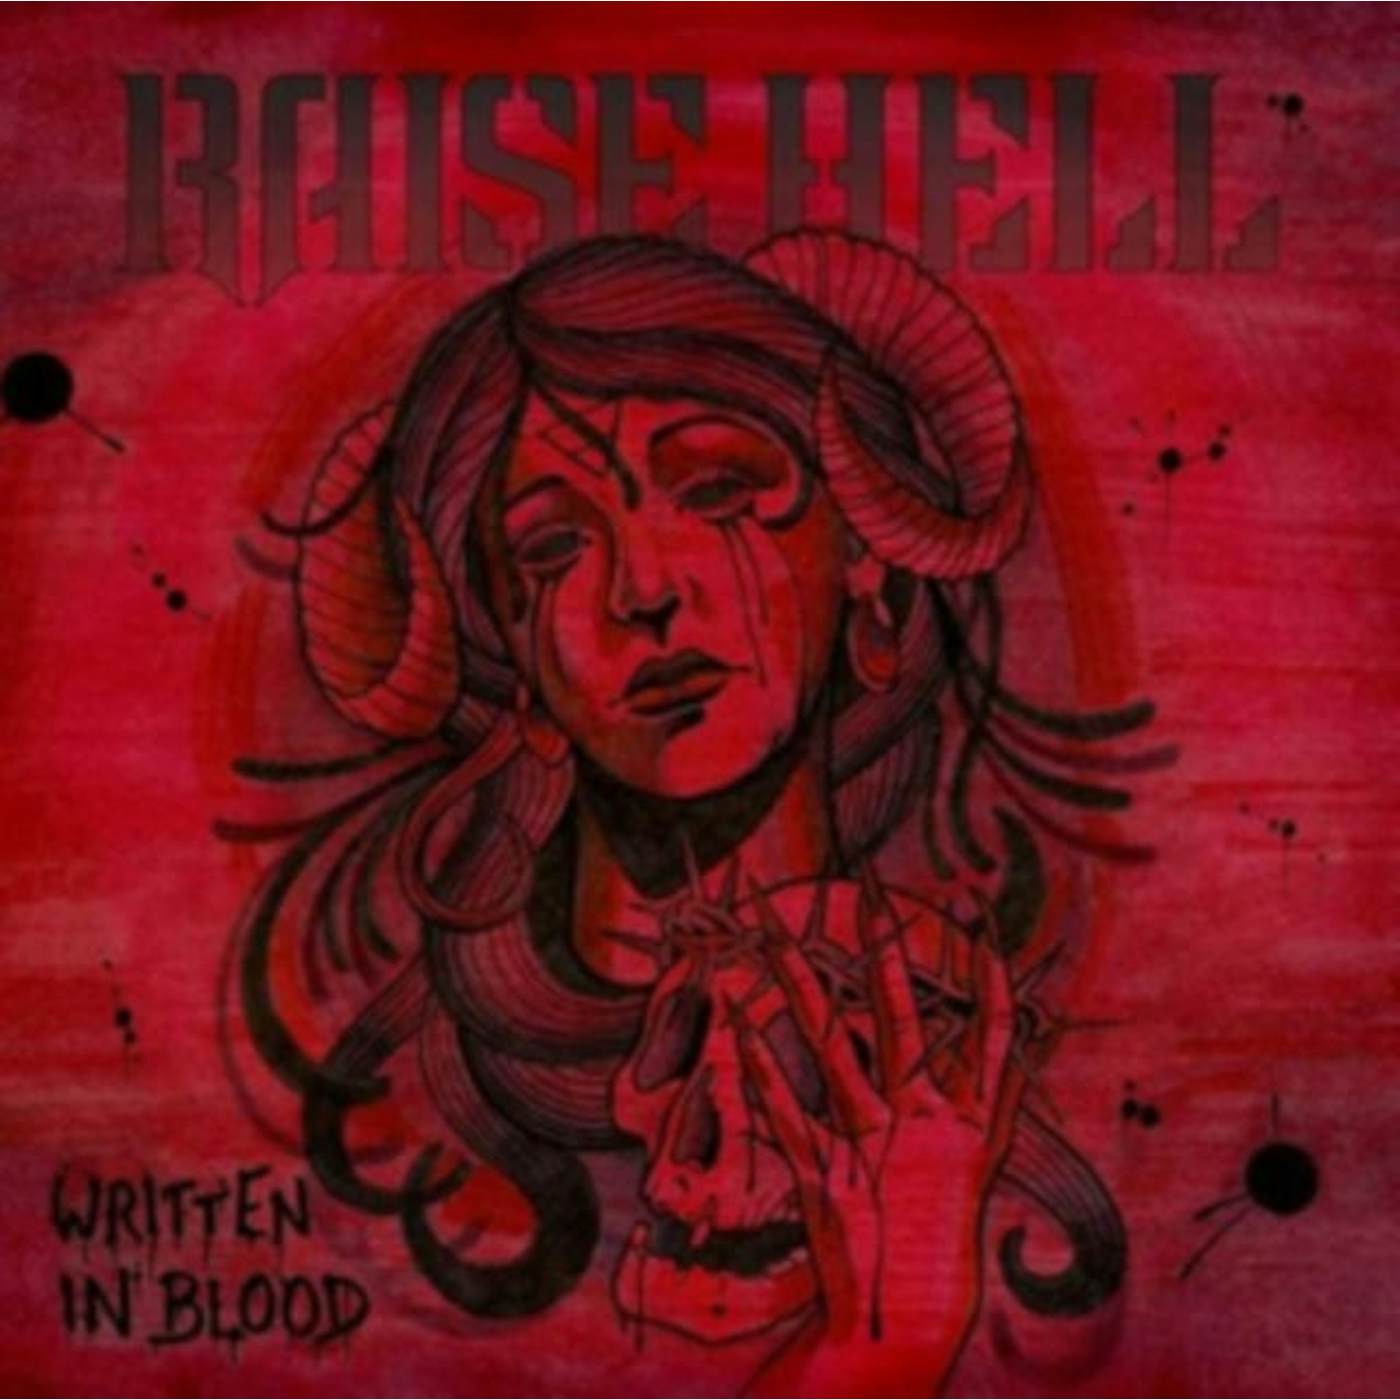 Raise Hell LP - Written In Blood (Vinyl)